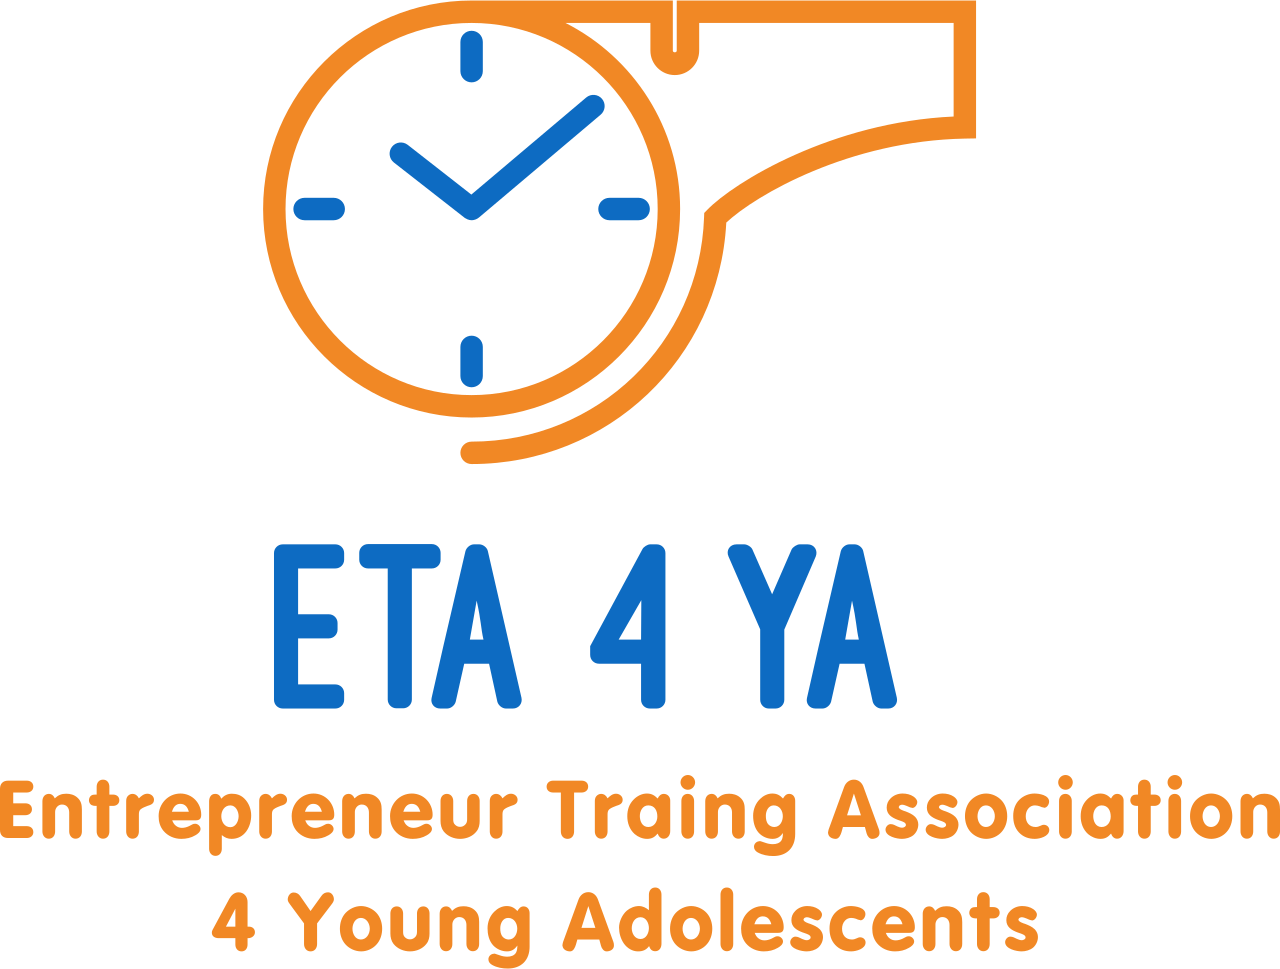 Entrepreneur training association for young adolescents 's logo